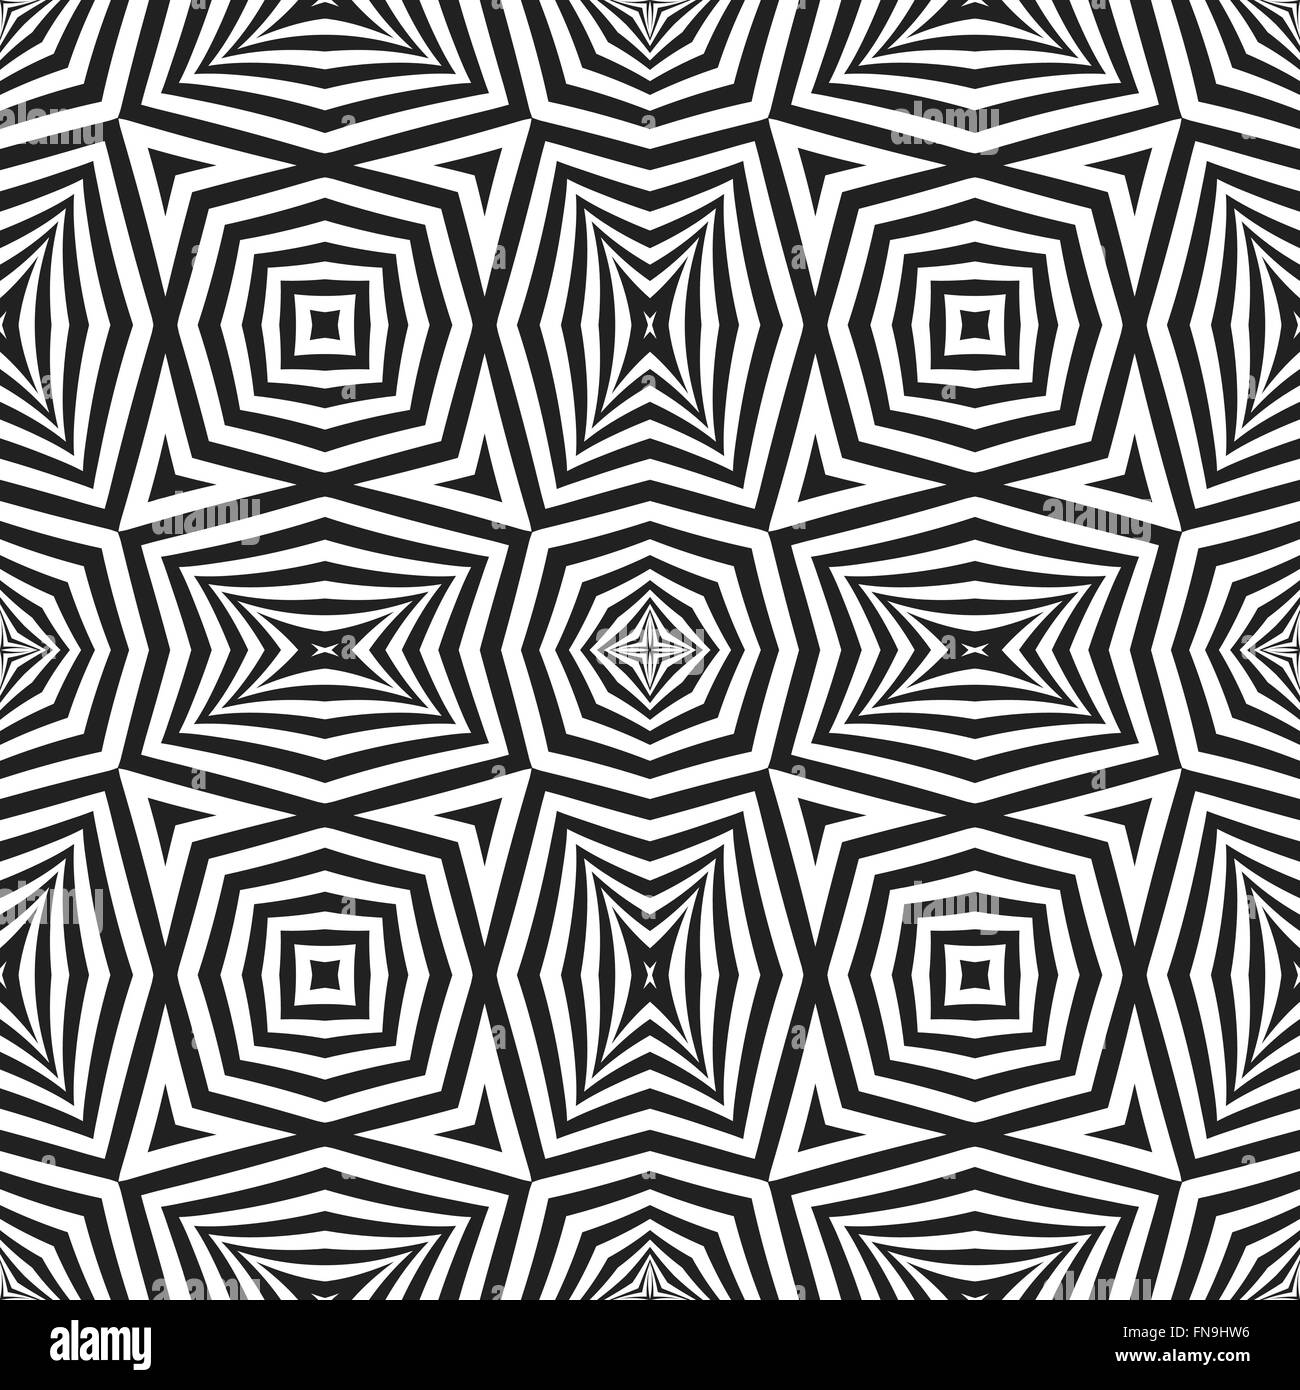 https://c8.alamy.com/comp/FN9HW6/vector-black-color-abstract-optical-art-illusion-design-decoration-FN9HW6.jpg